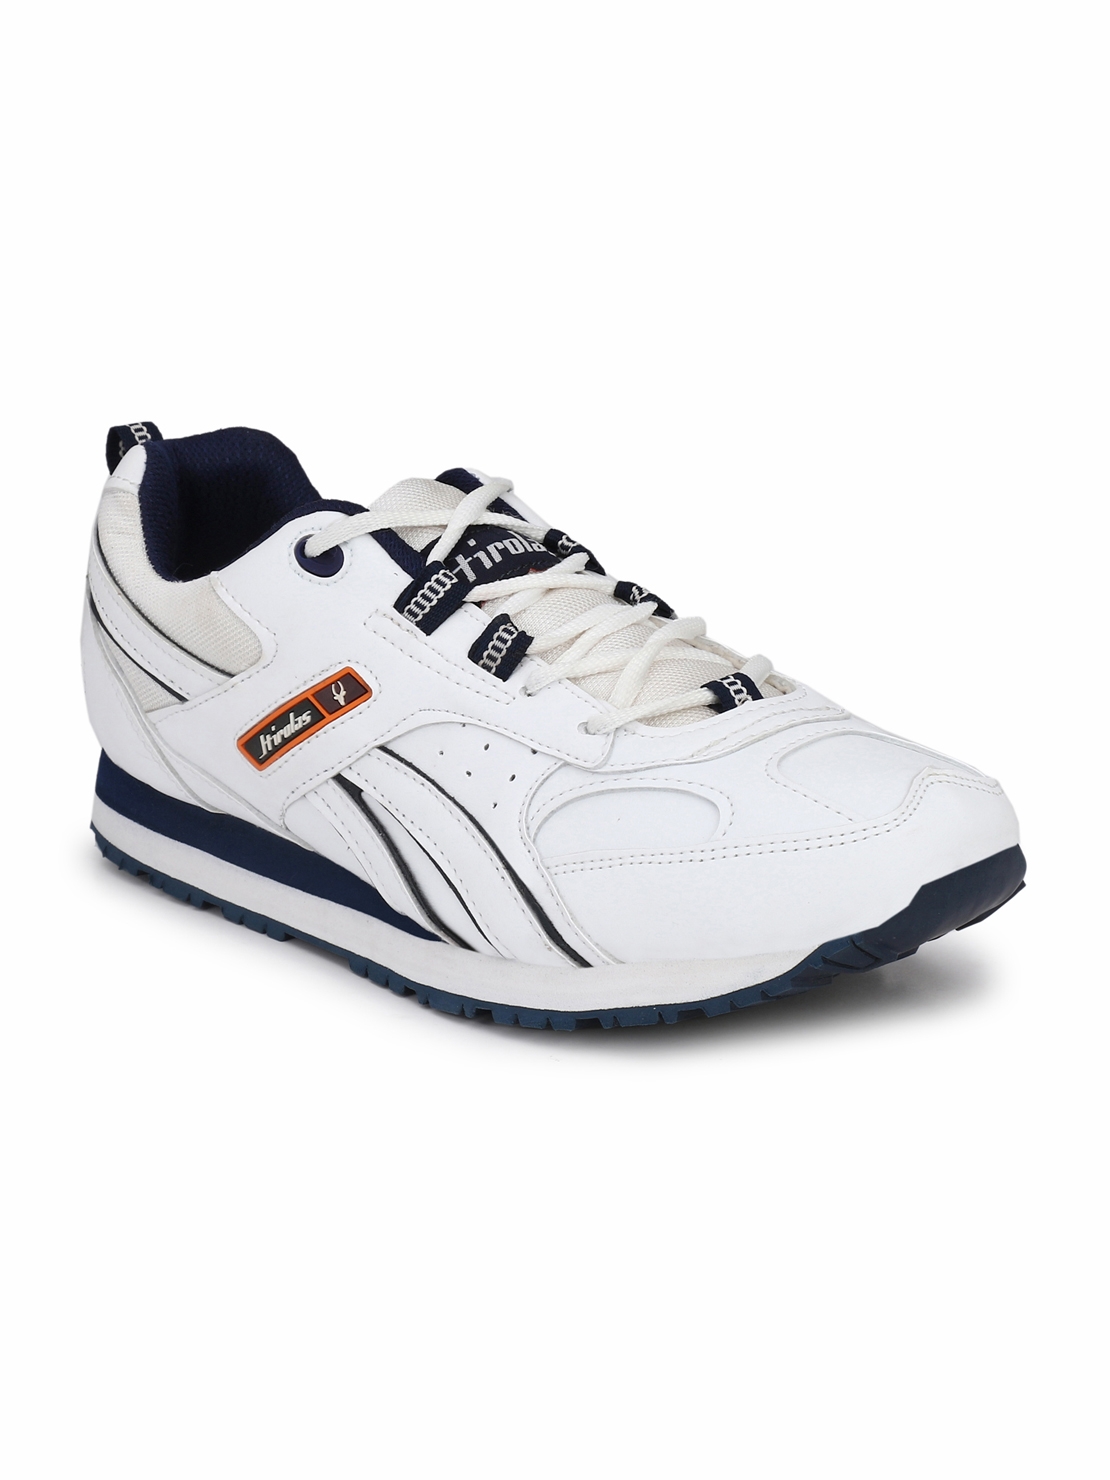 Hirolas | Hirolas Multi Sport Shock Absorbing Walking  Running Fitness Athletic Training Gym Sneaker Shoes - White